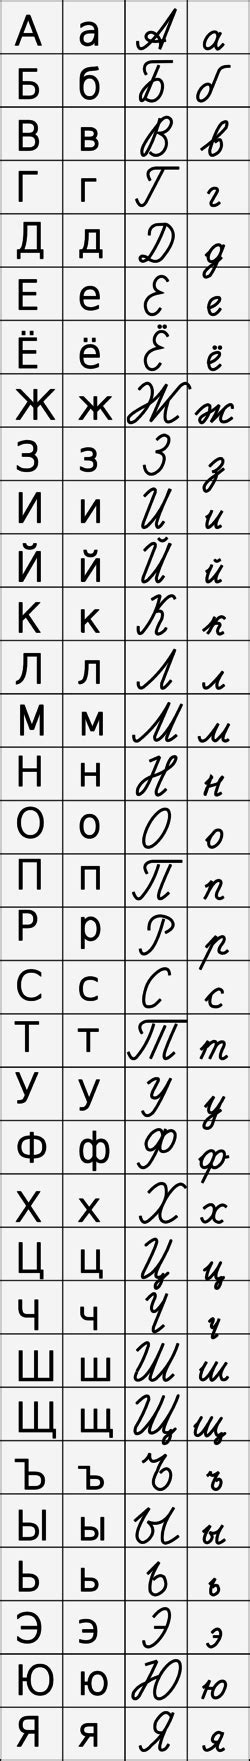 Russian Cursive Wikipedia Russian Alphabet Cursive Alphabet